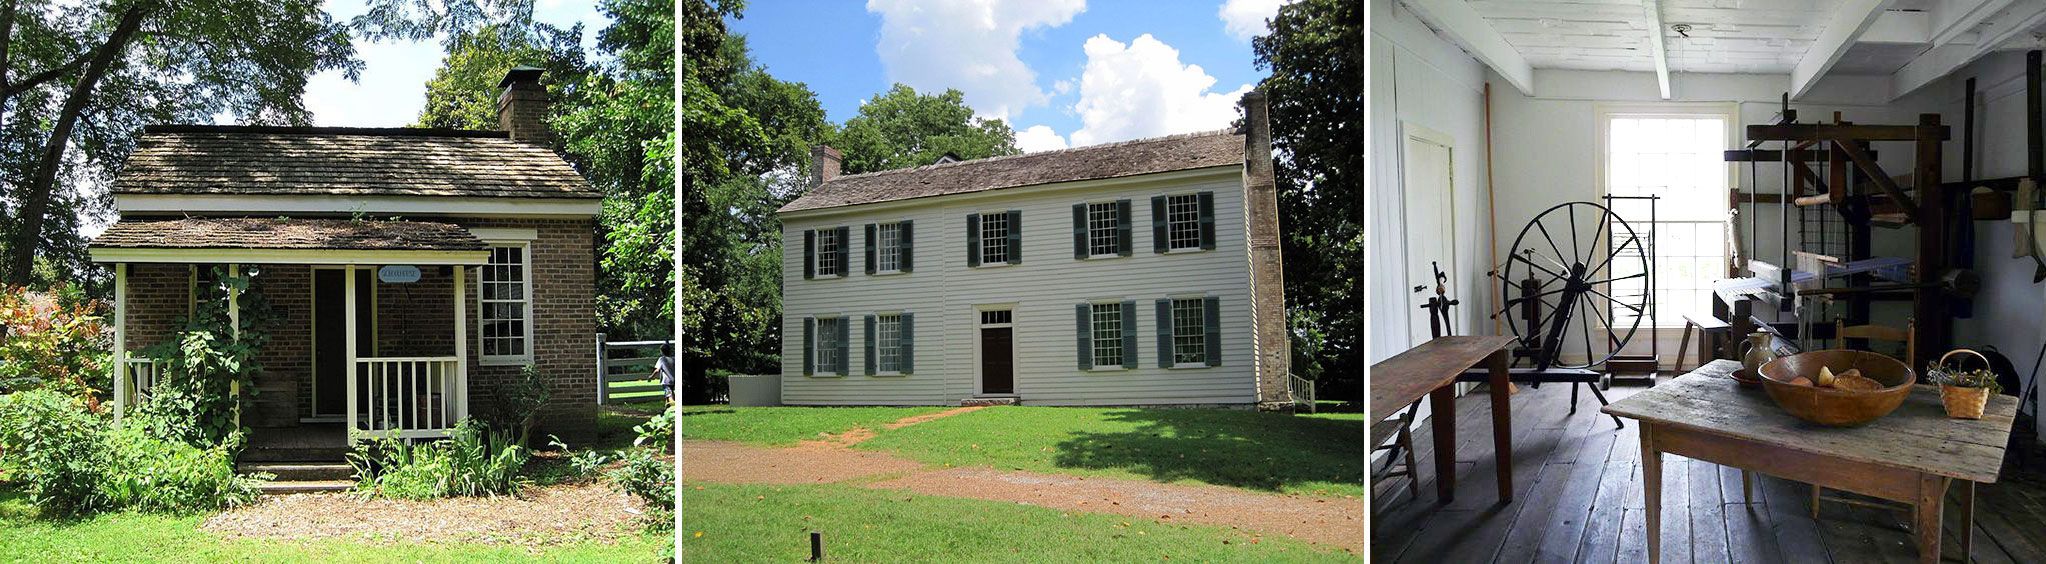 Historic Travellers Rest Plantation & Museum in Nashville, TN